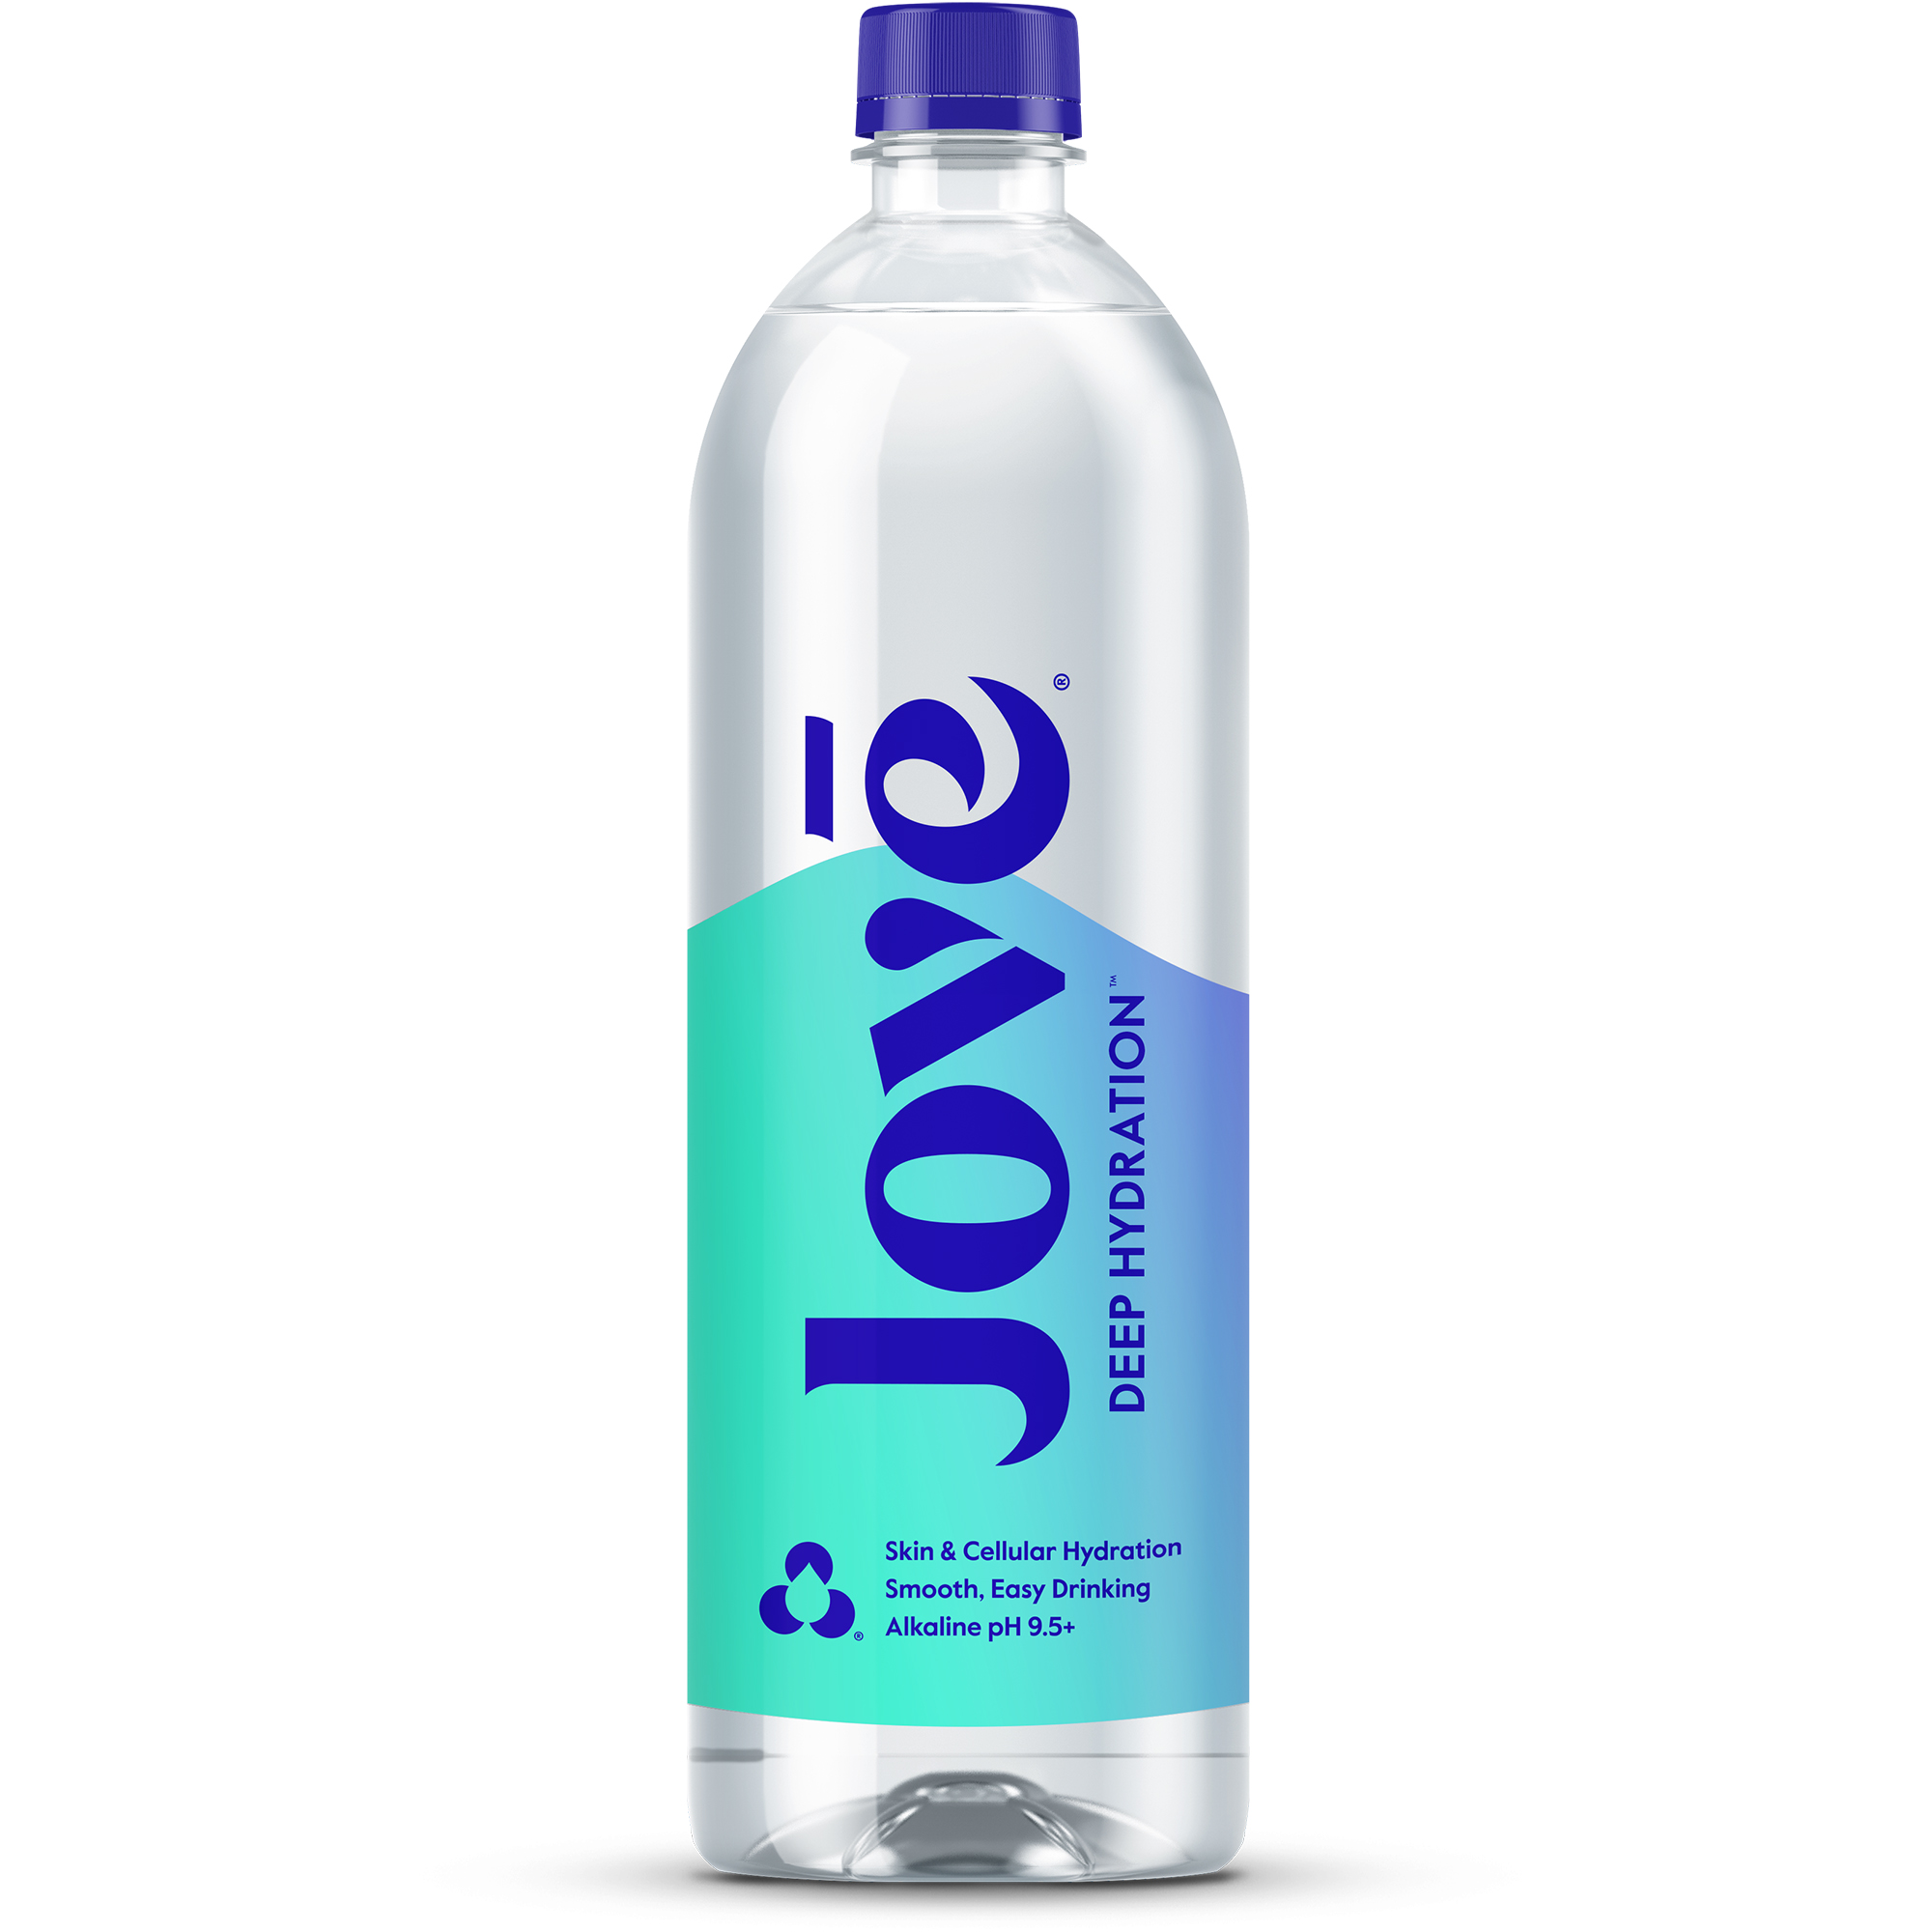 Jovē one-liter bottle